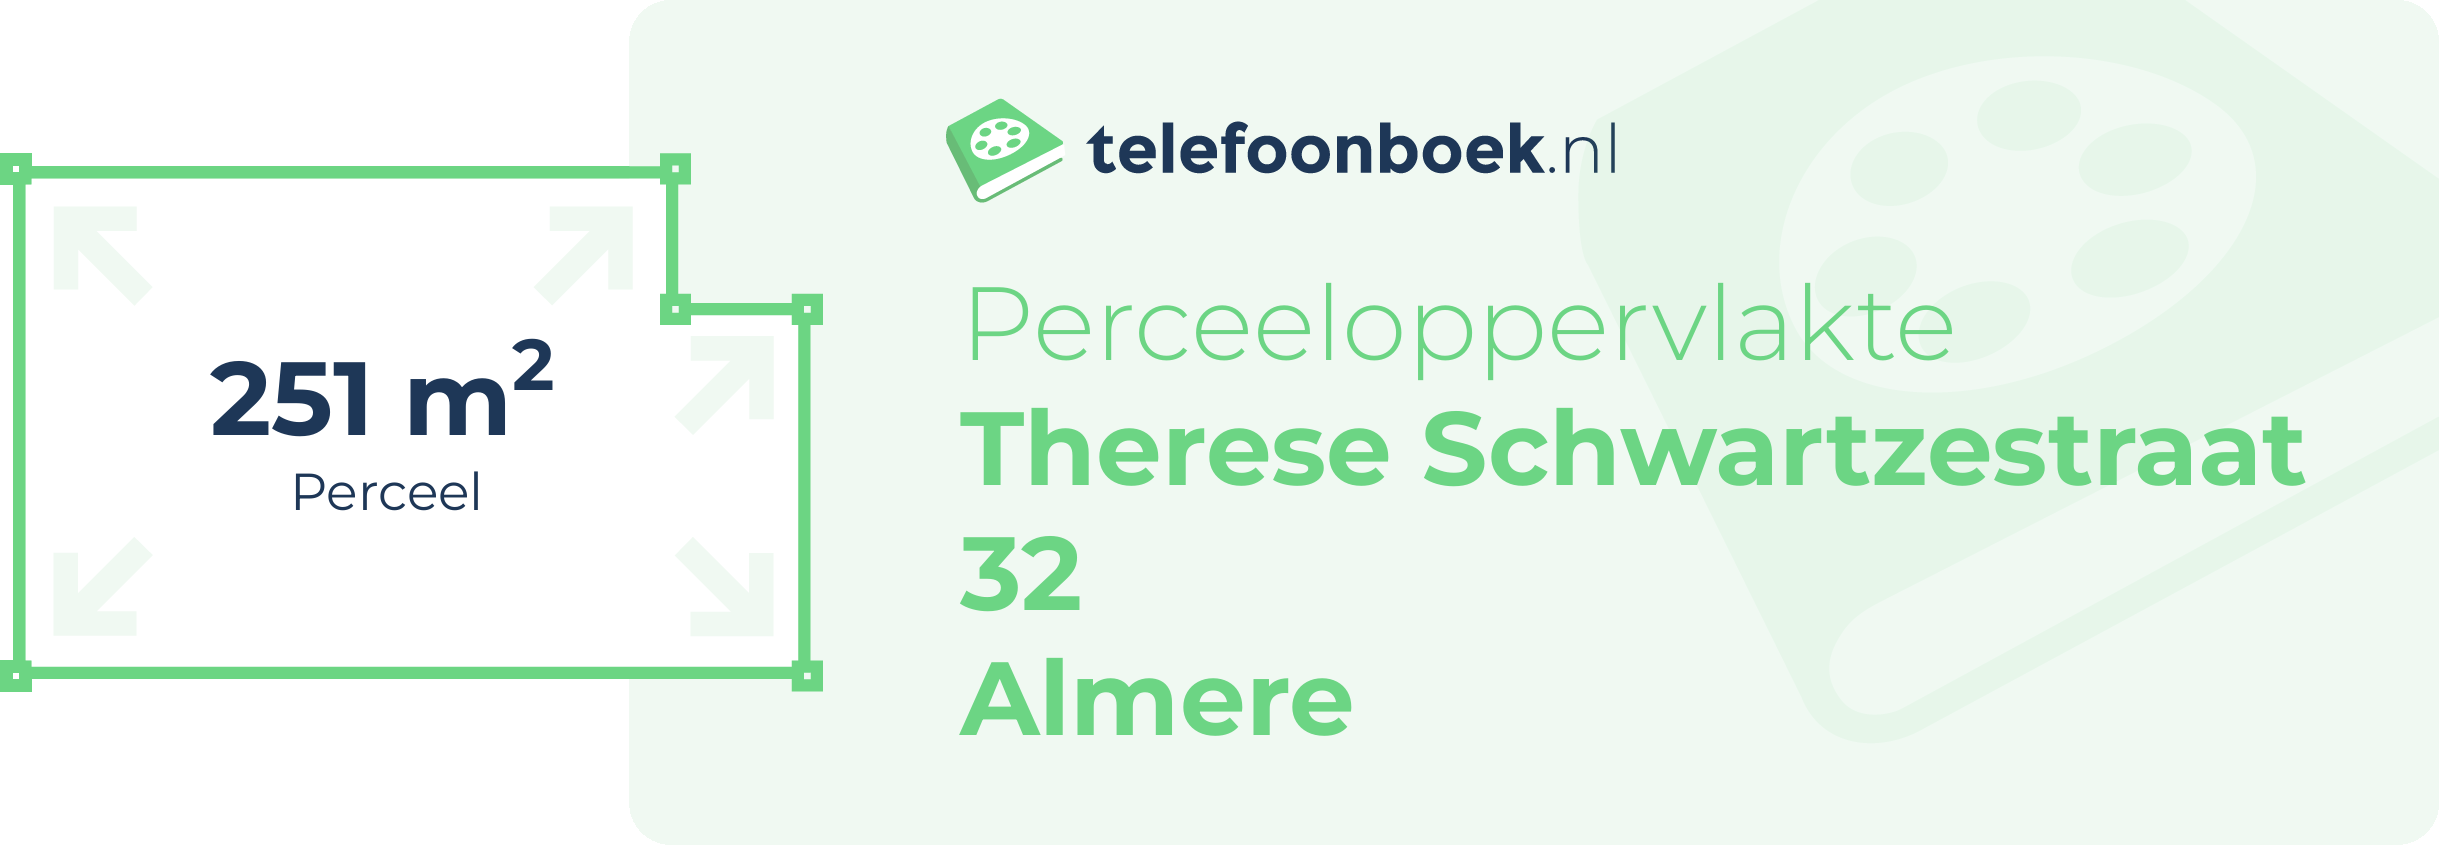 Perceeloppervlakte Therese Schwartzestraat 32 Almere